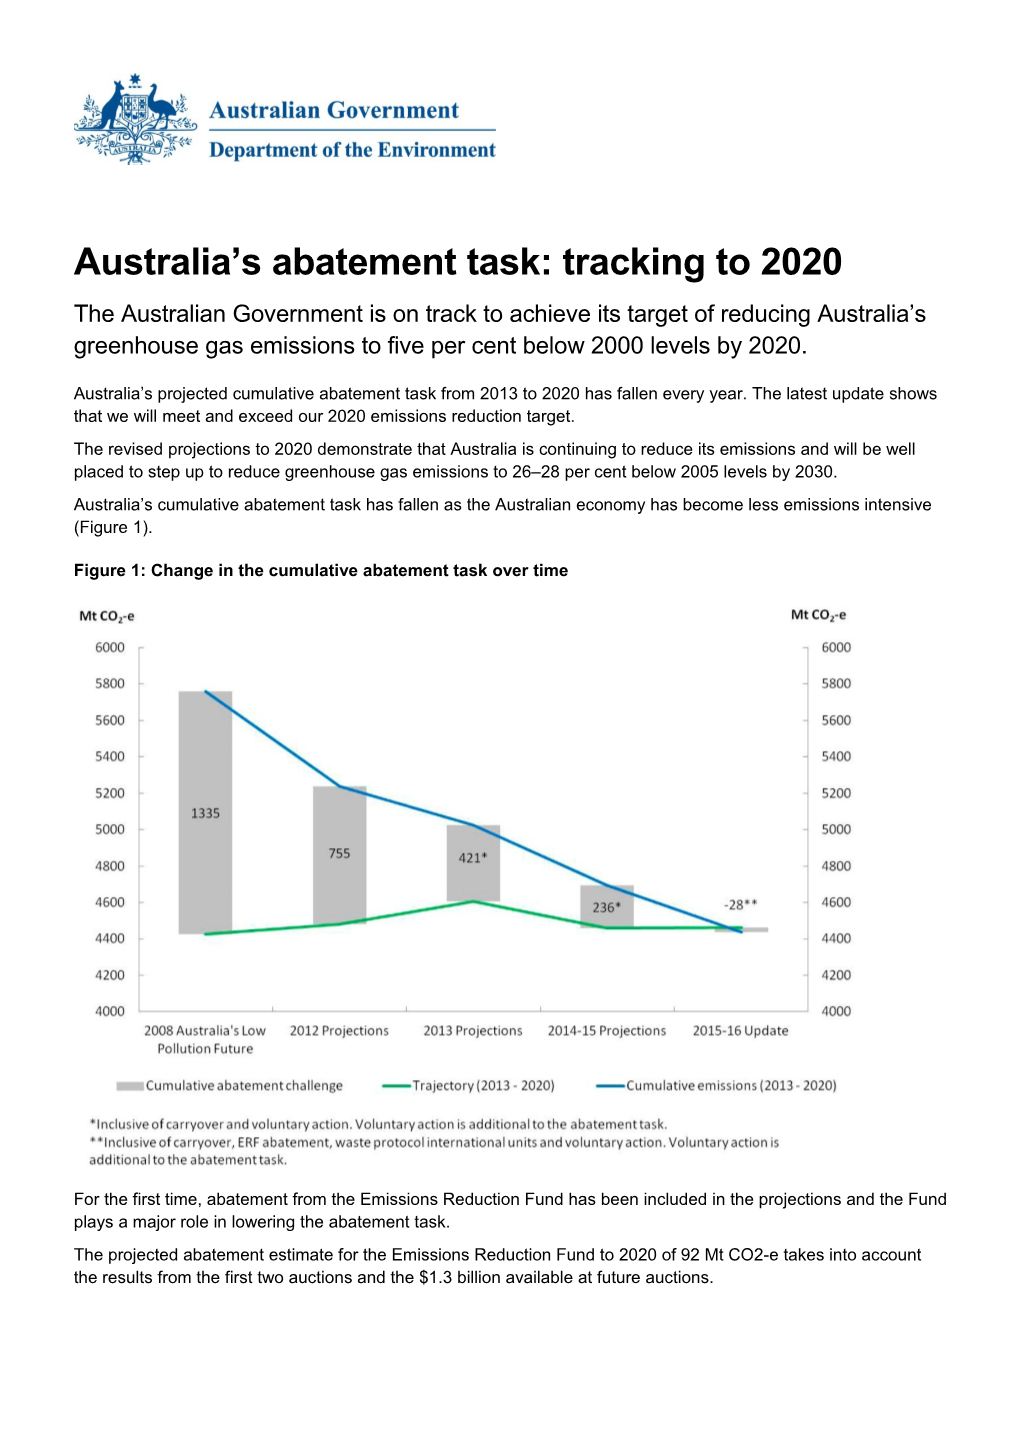 Australia's Abatement Task: Tracking to 2020